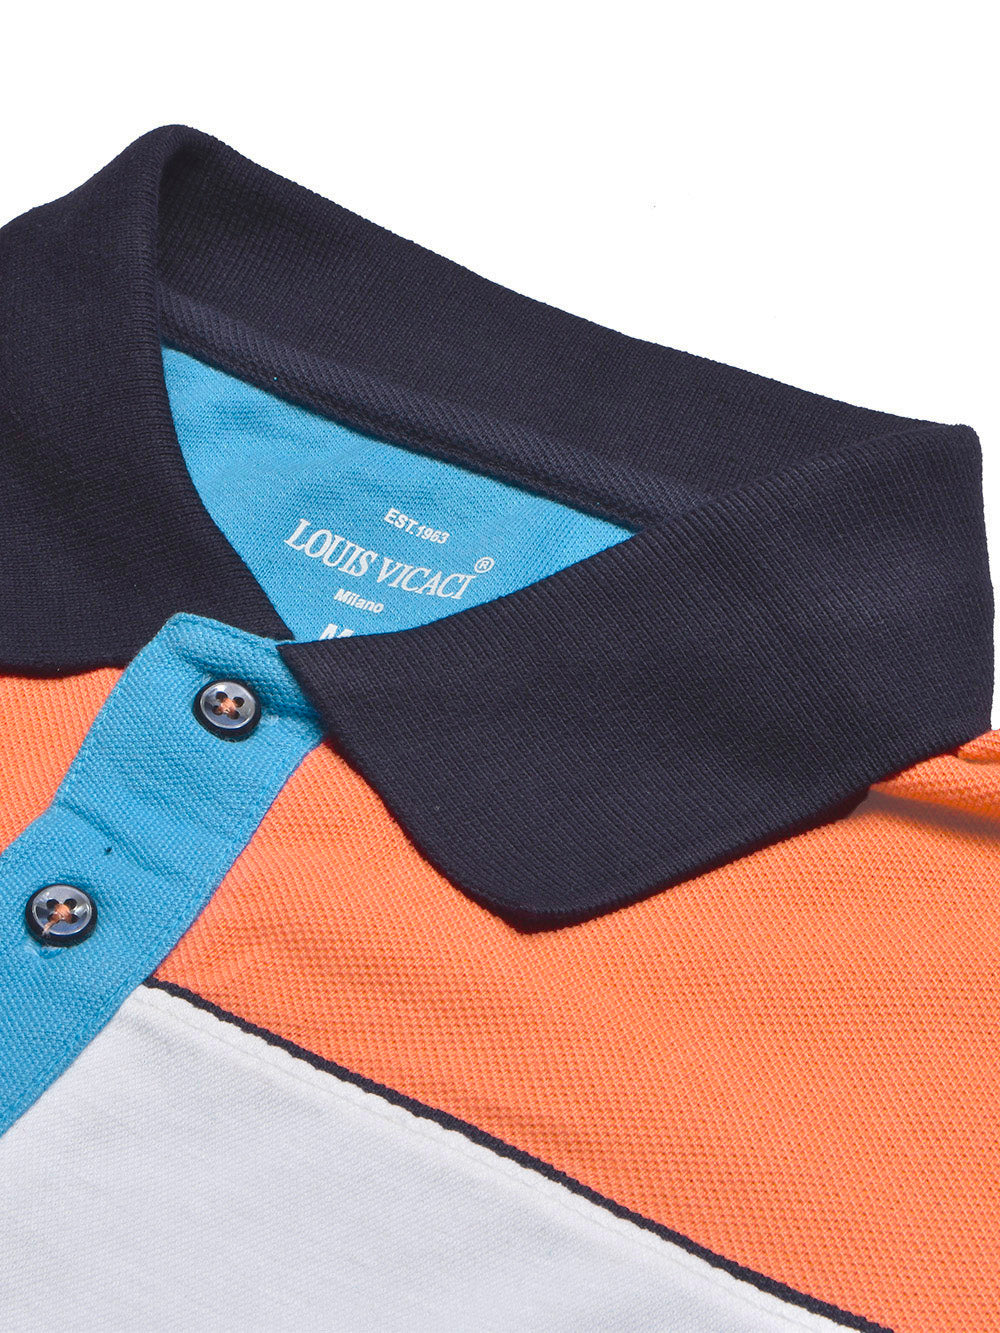 LV Summer Polo Shirt For Men-Sky Blue with White & Orange Panel-BE821/BR13061